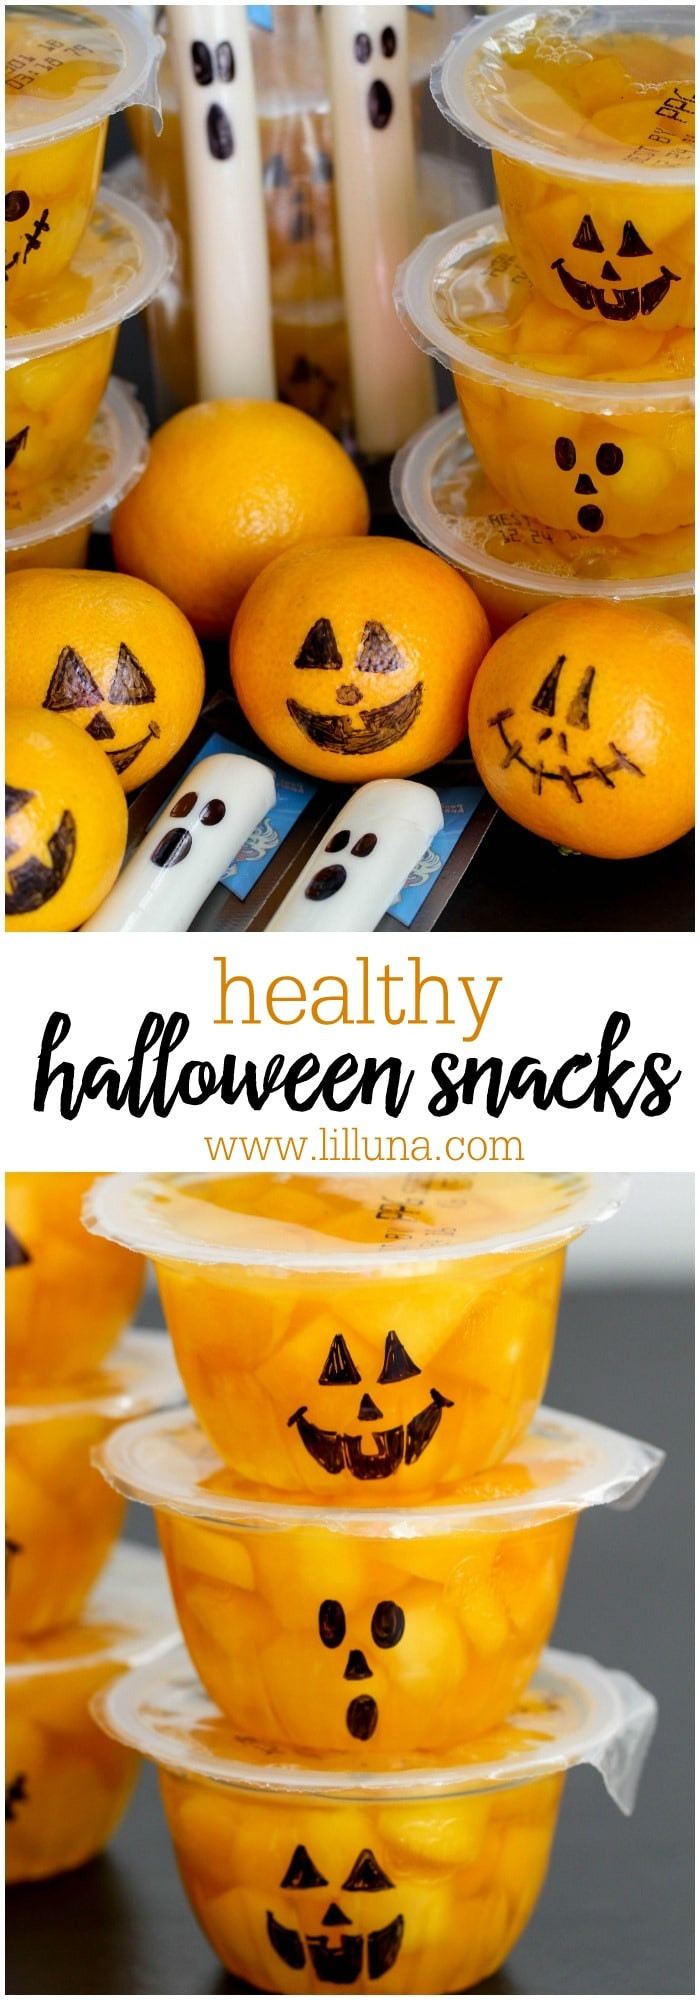 Healthy Halloween Party Snacks
 Healthy Halloween Snacks Lil Luna